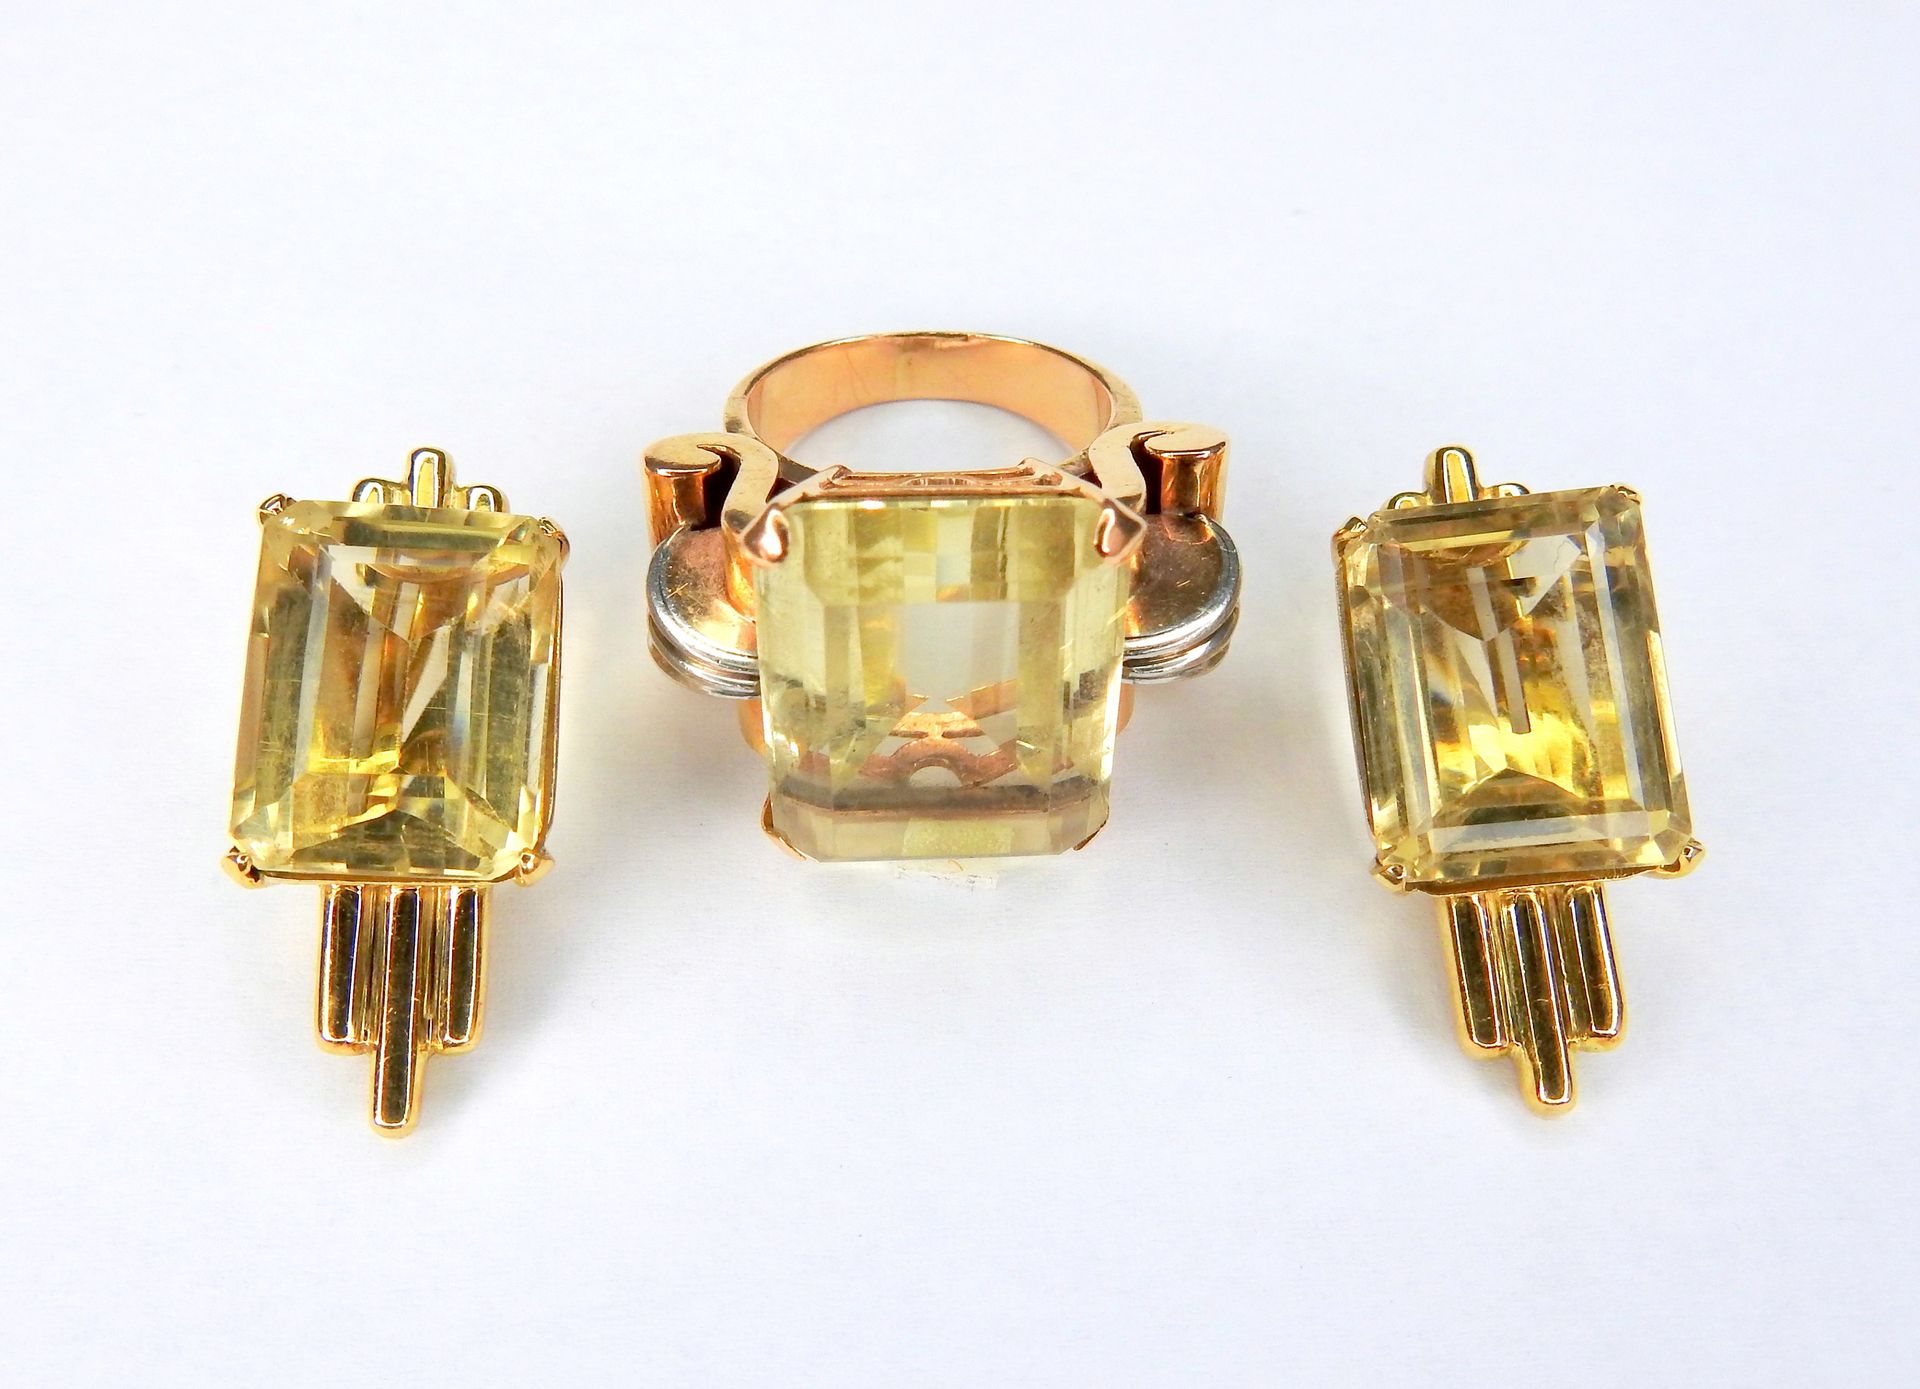 Zitrin-Schmuckset 14K金。该套装由1个女式戒指和1对耳夹组成。这枚玫瑰金和白金的戒指上镶嵌着一颗长方形切割的黄水晶，从镶嵌的角度看，约为18&hellip;